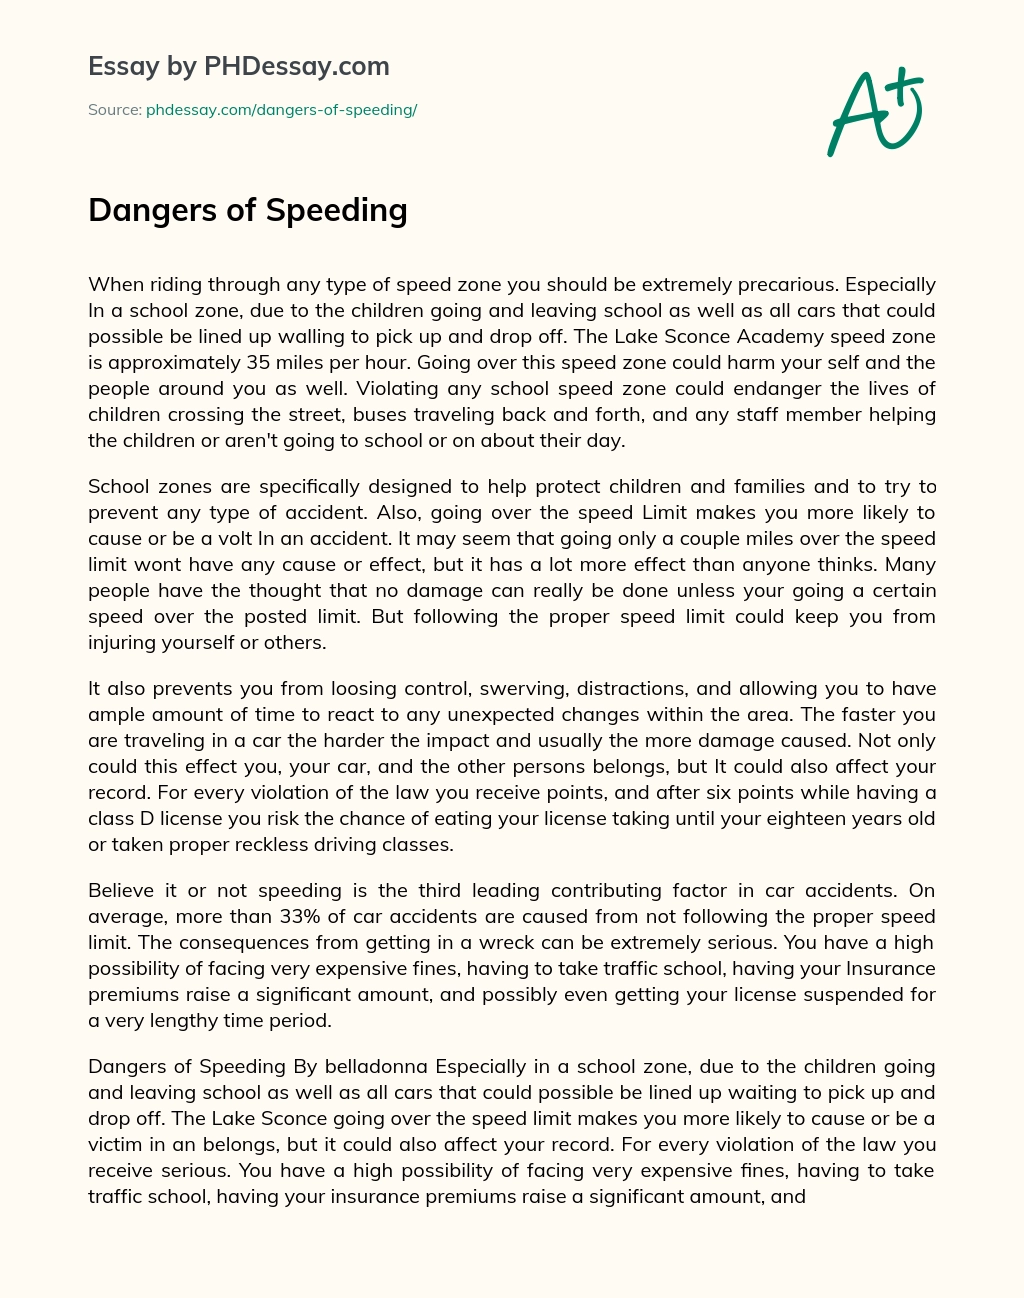 Dangers of Speeding essay